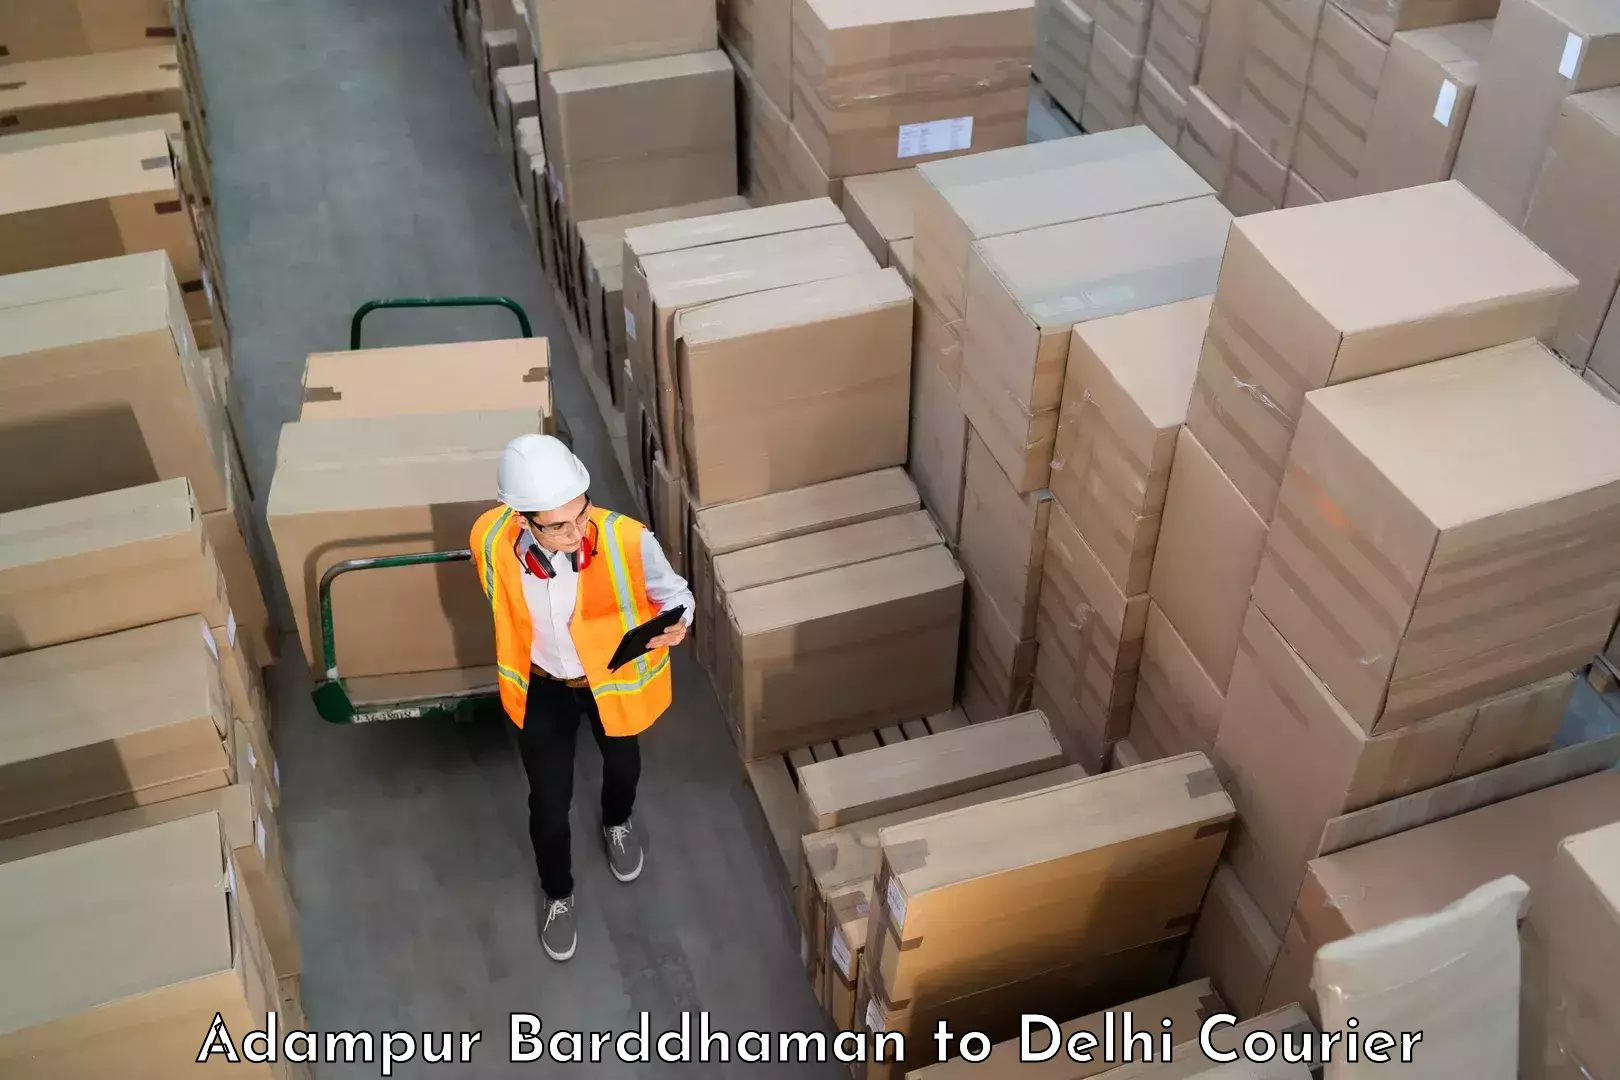 Same day luggage service Adampur Barddhaman to IIT Delhi